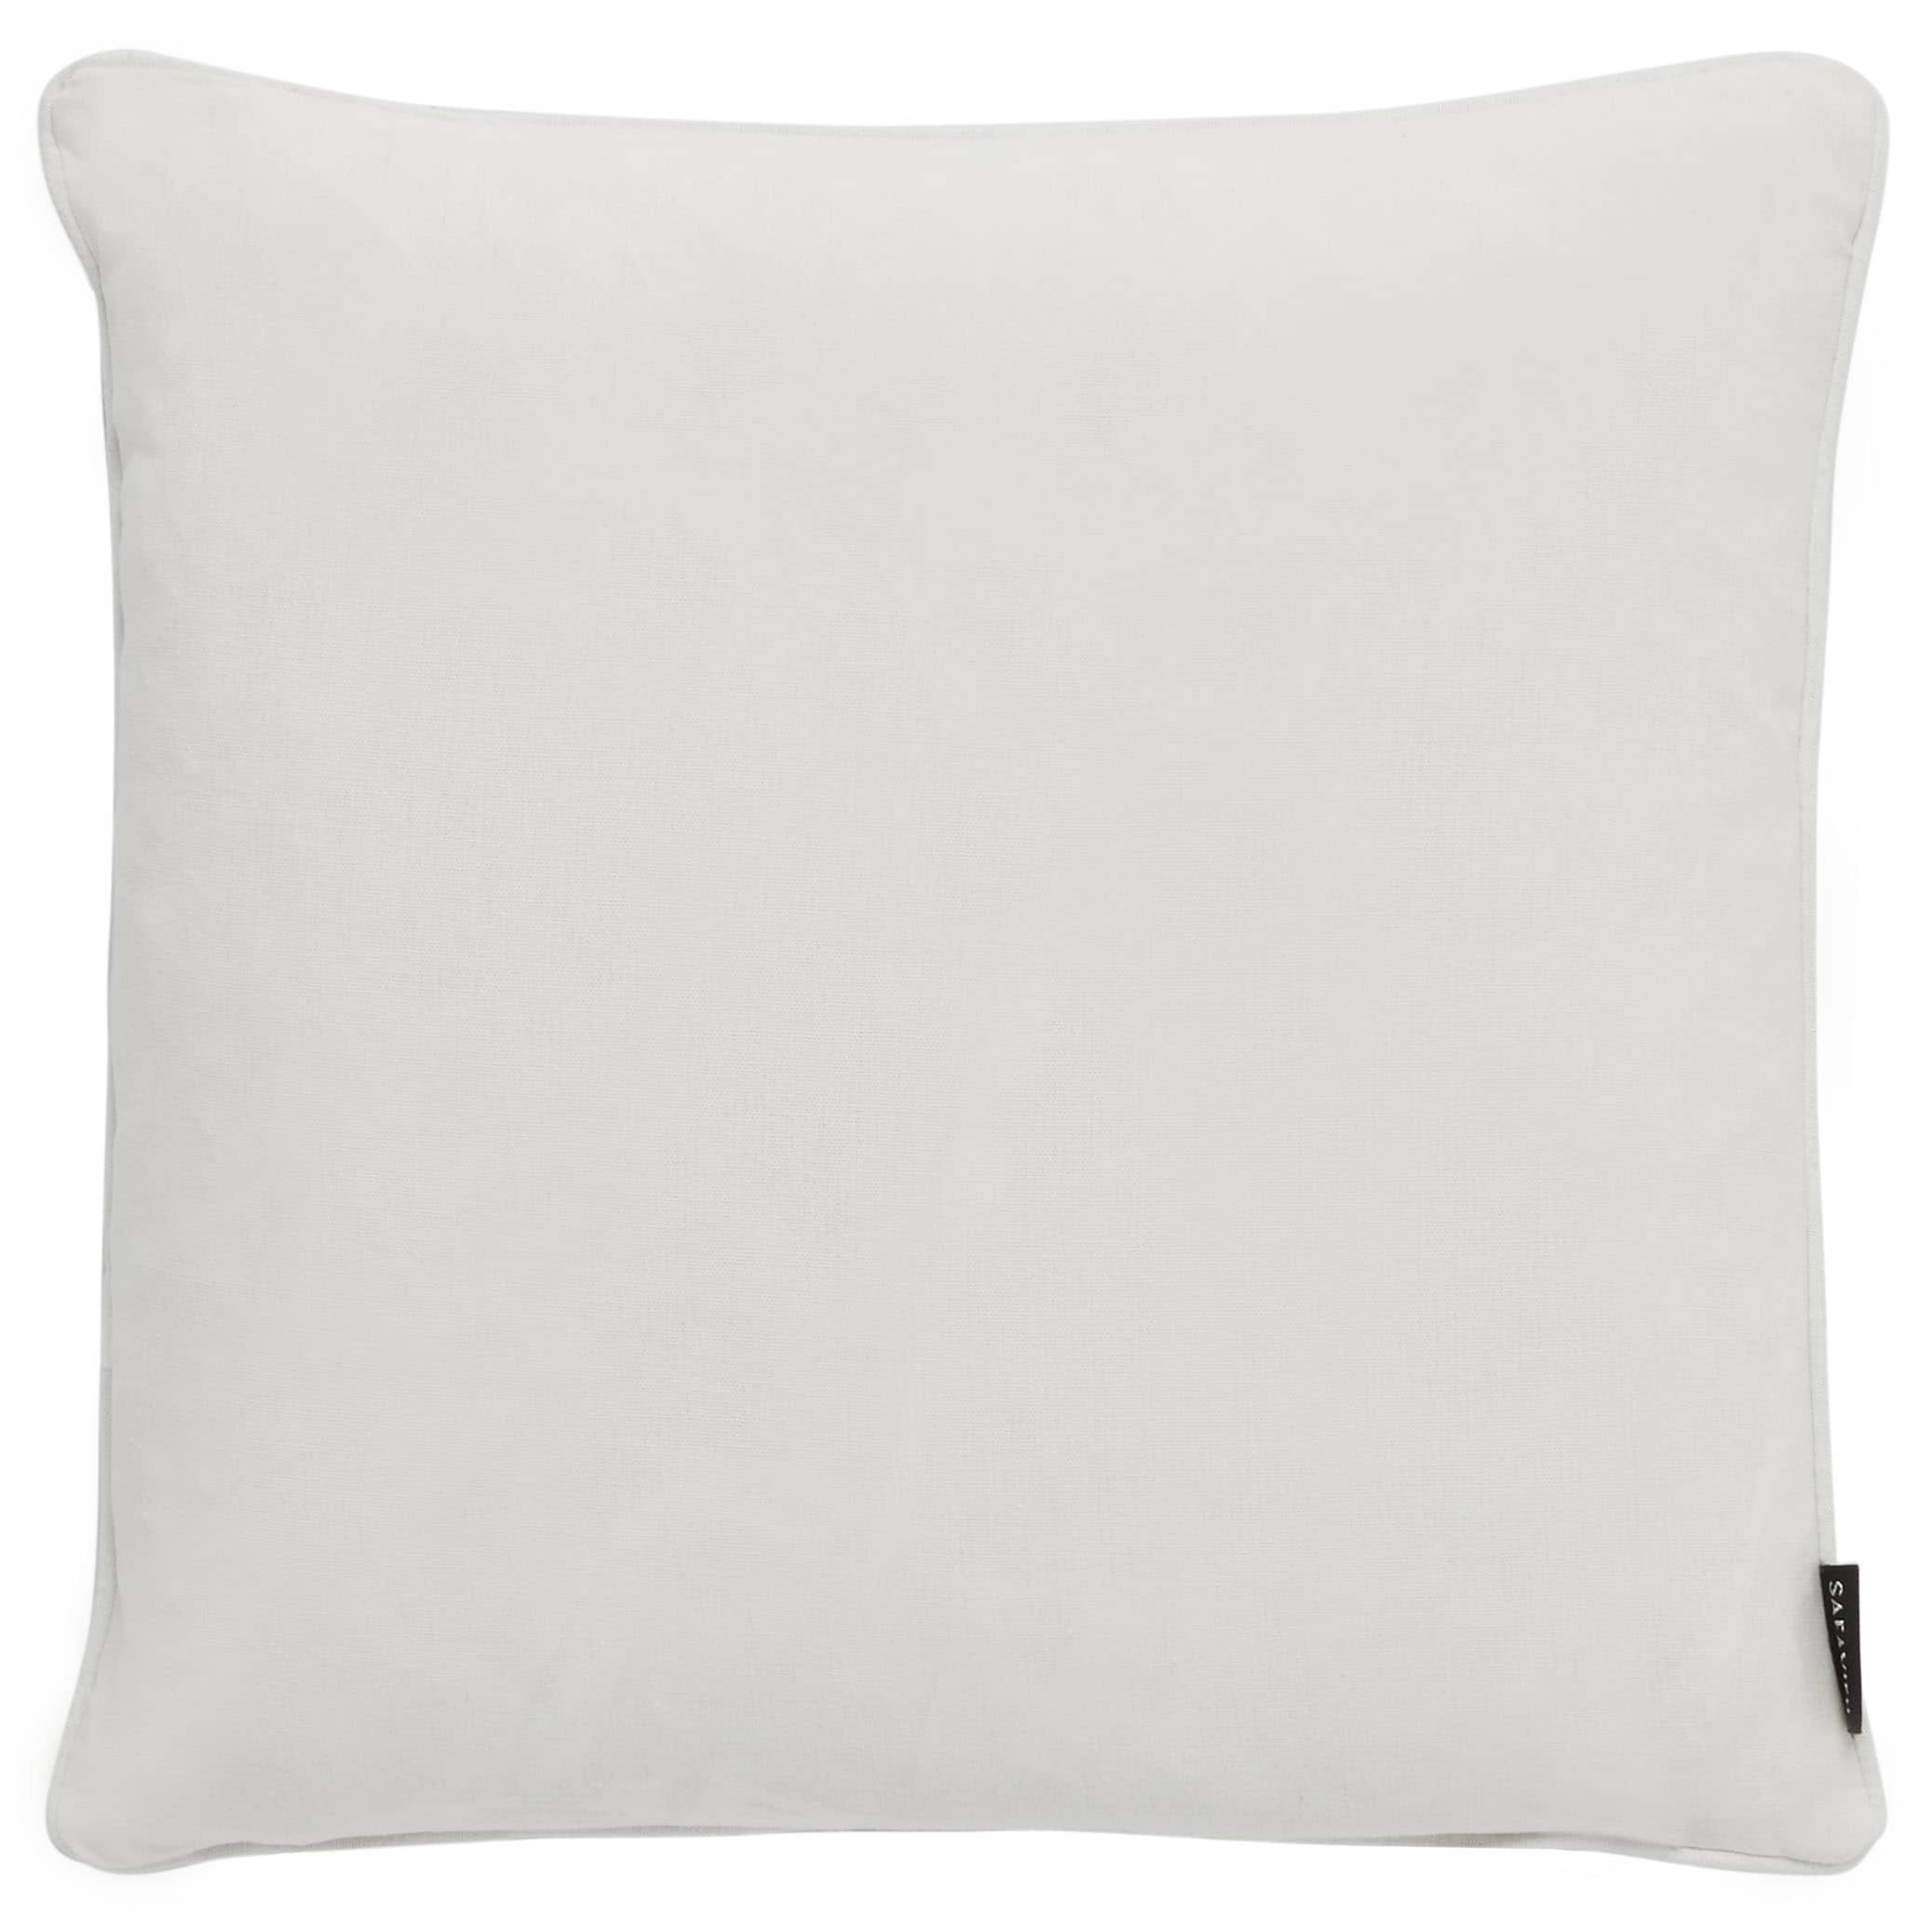  Safavieh Pillows Collection Maize Decorative Pillow, 22-Inch,  Black, Set of 2 : Home & Kitchen